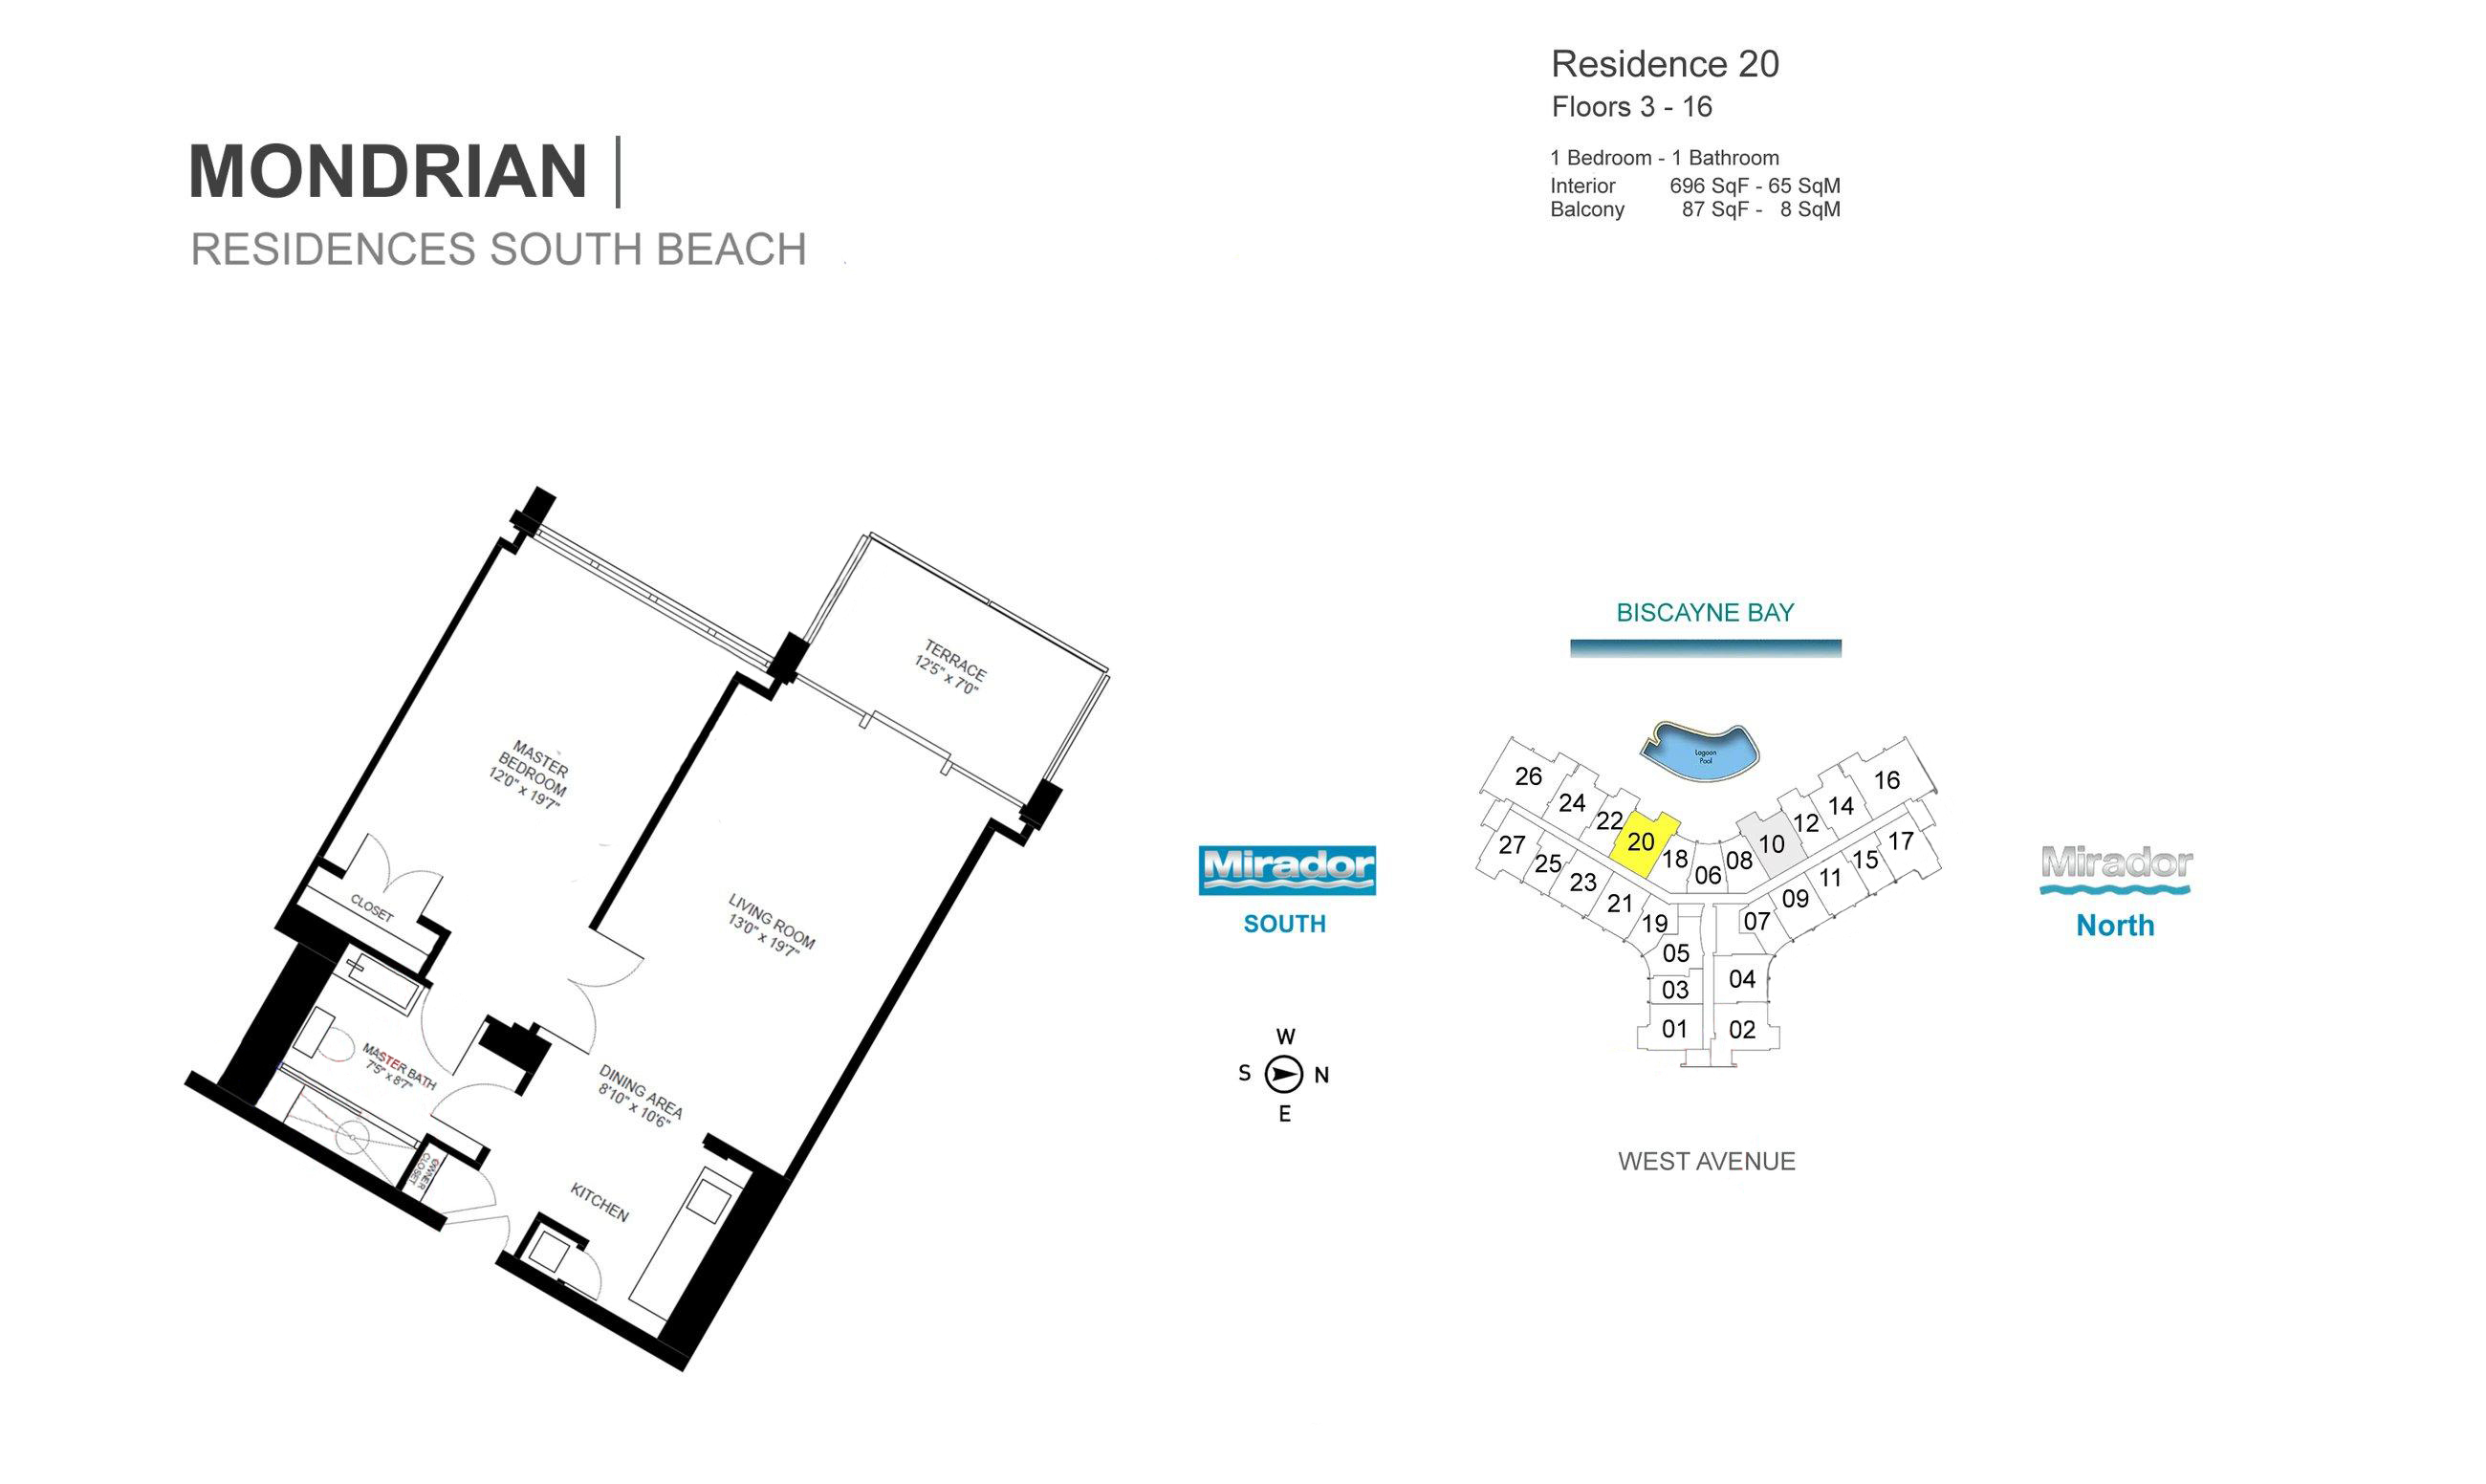 Mondrian South Beach Residence 20